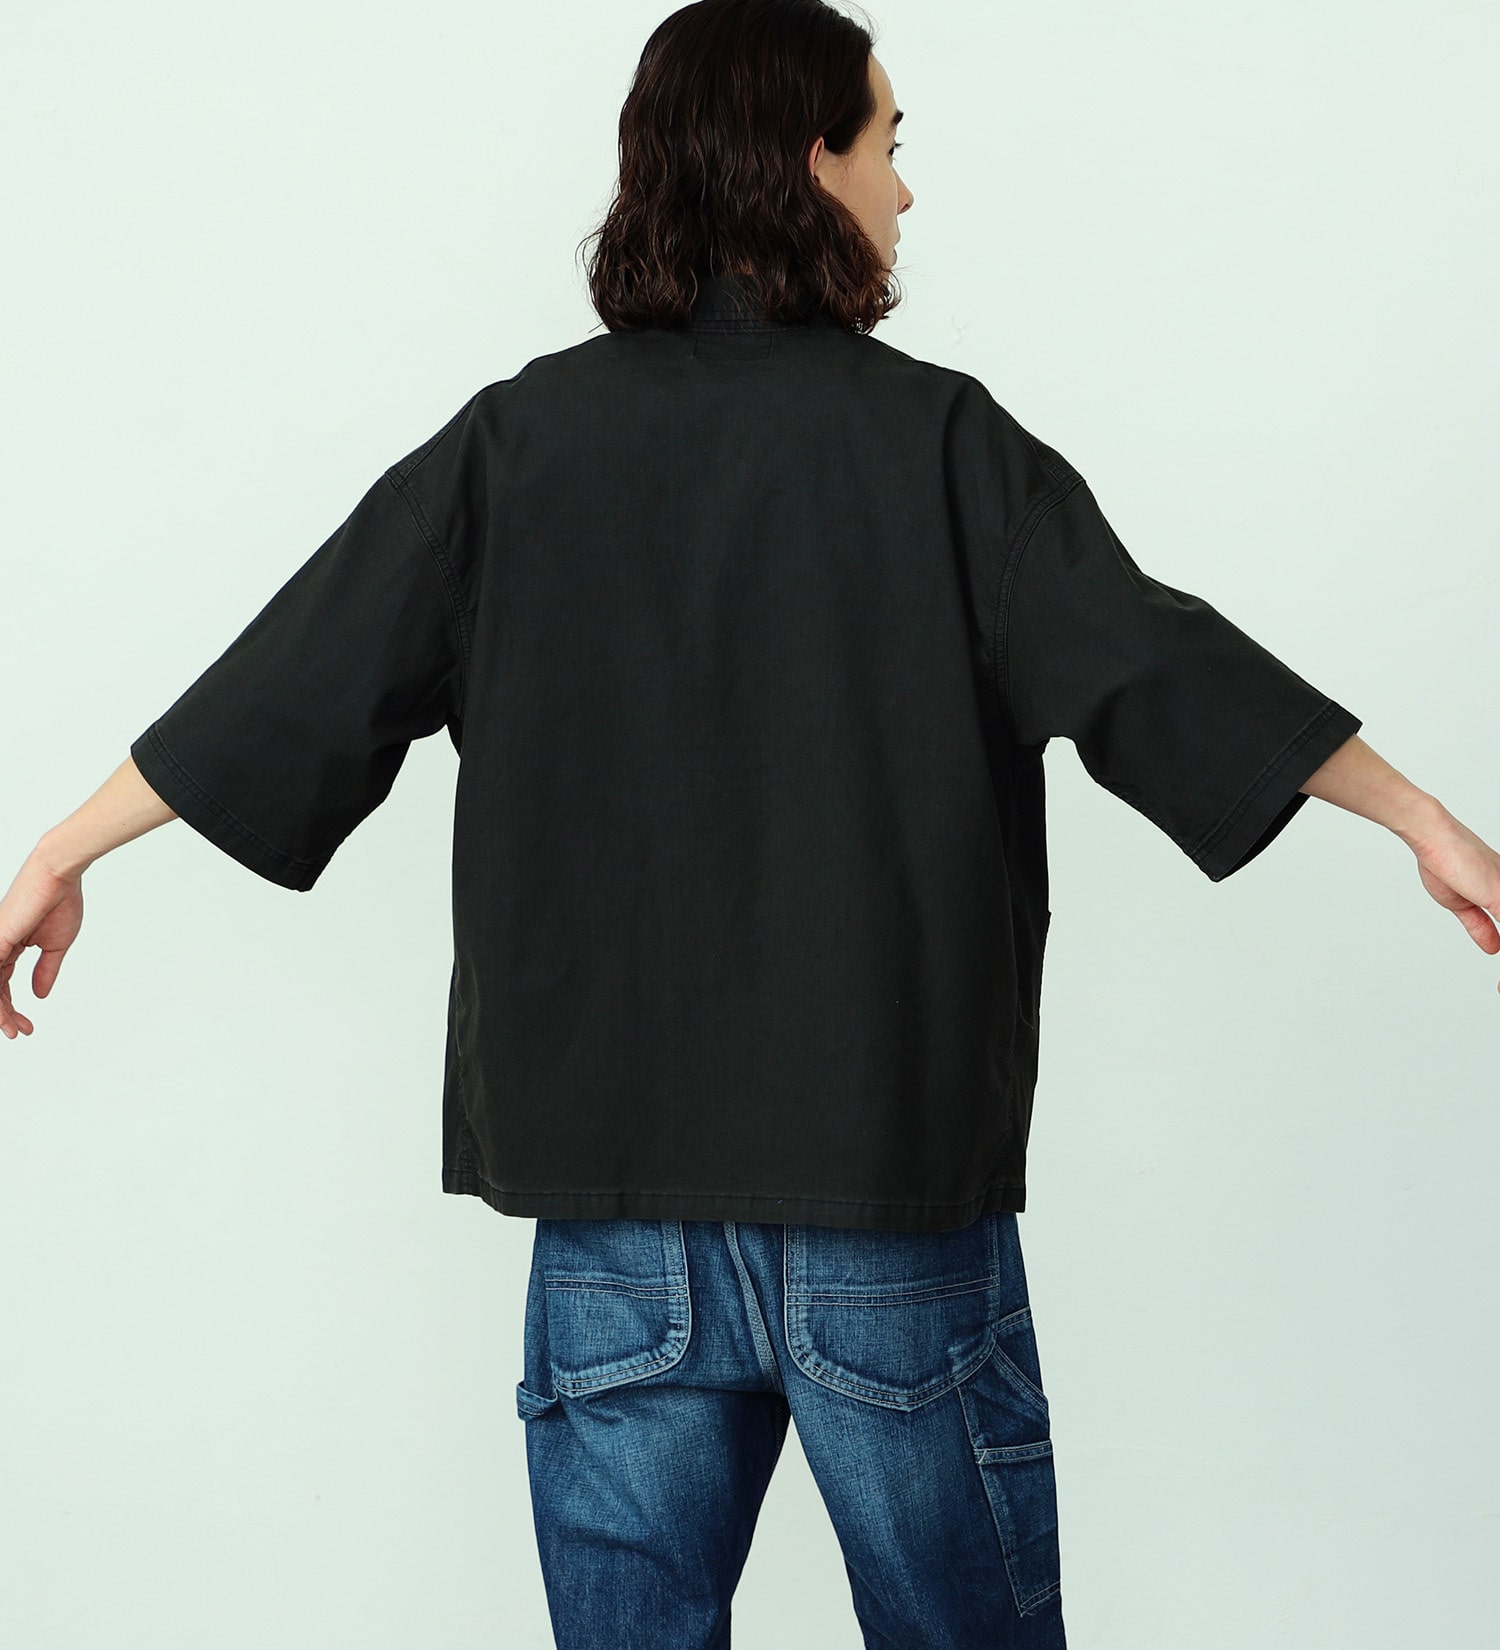 Lee(リー)の【FINAL SALE】リネン混 LOCO ハーフスリーブシャツ|ジャケット/アウター/カバーオール/メンズ|ブラック